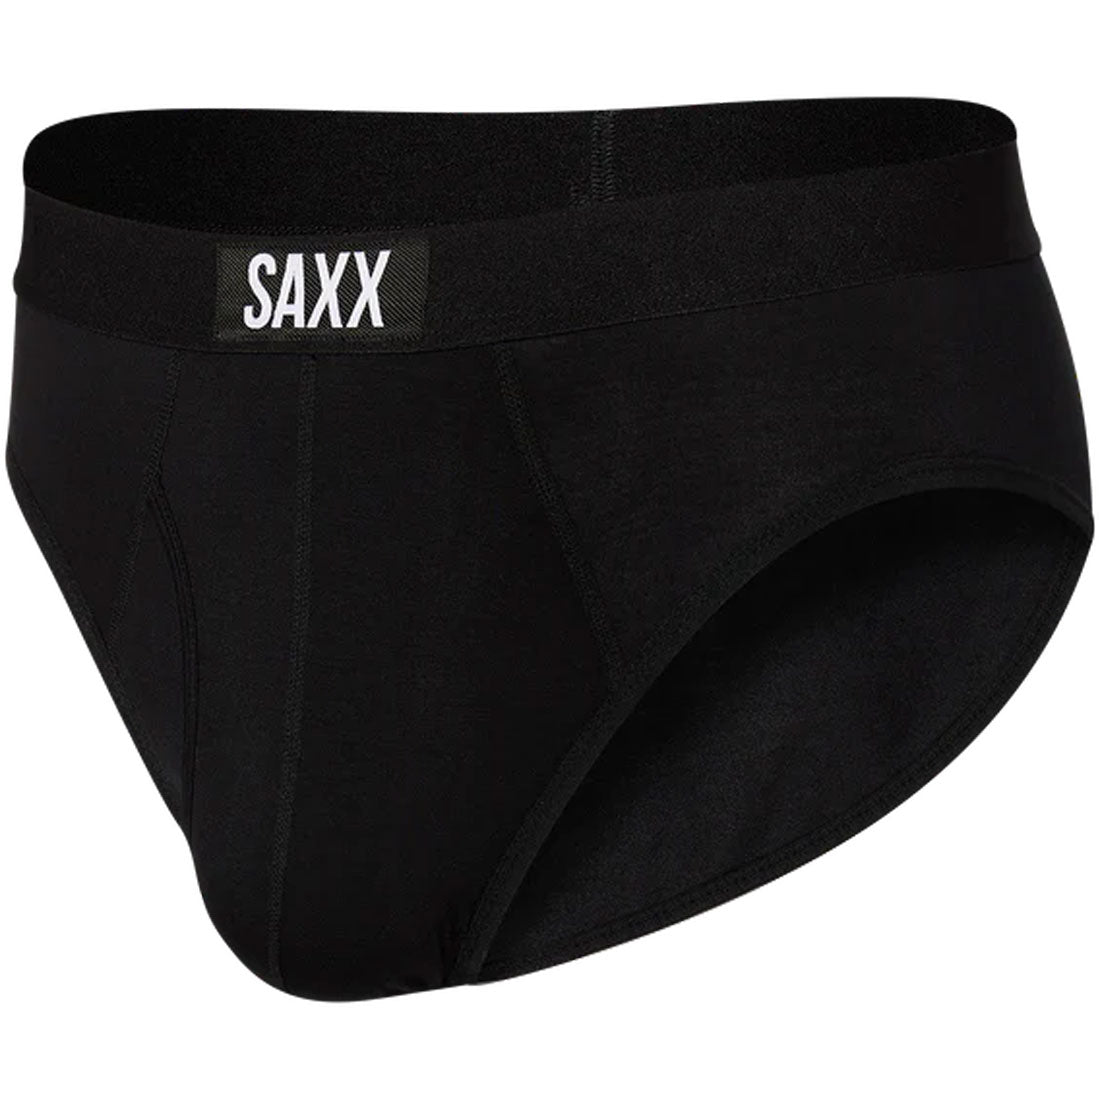 SAXX Ultra Brief w/Fly -  Men's